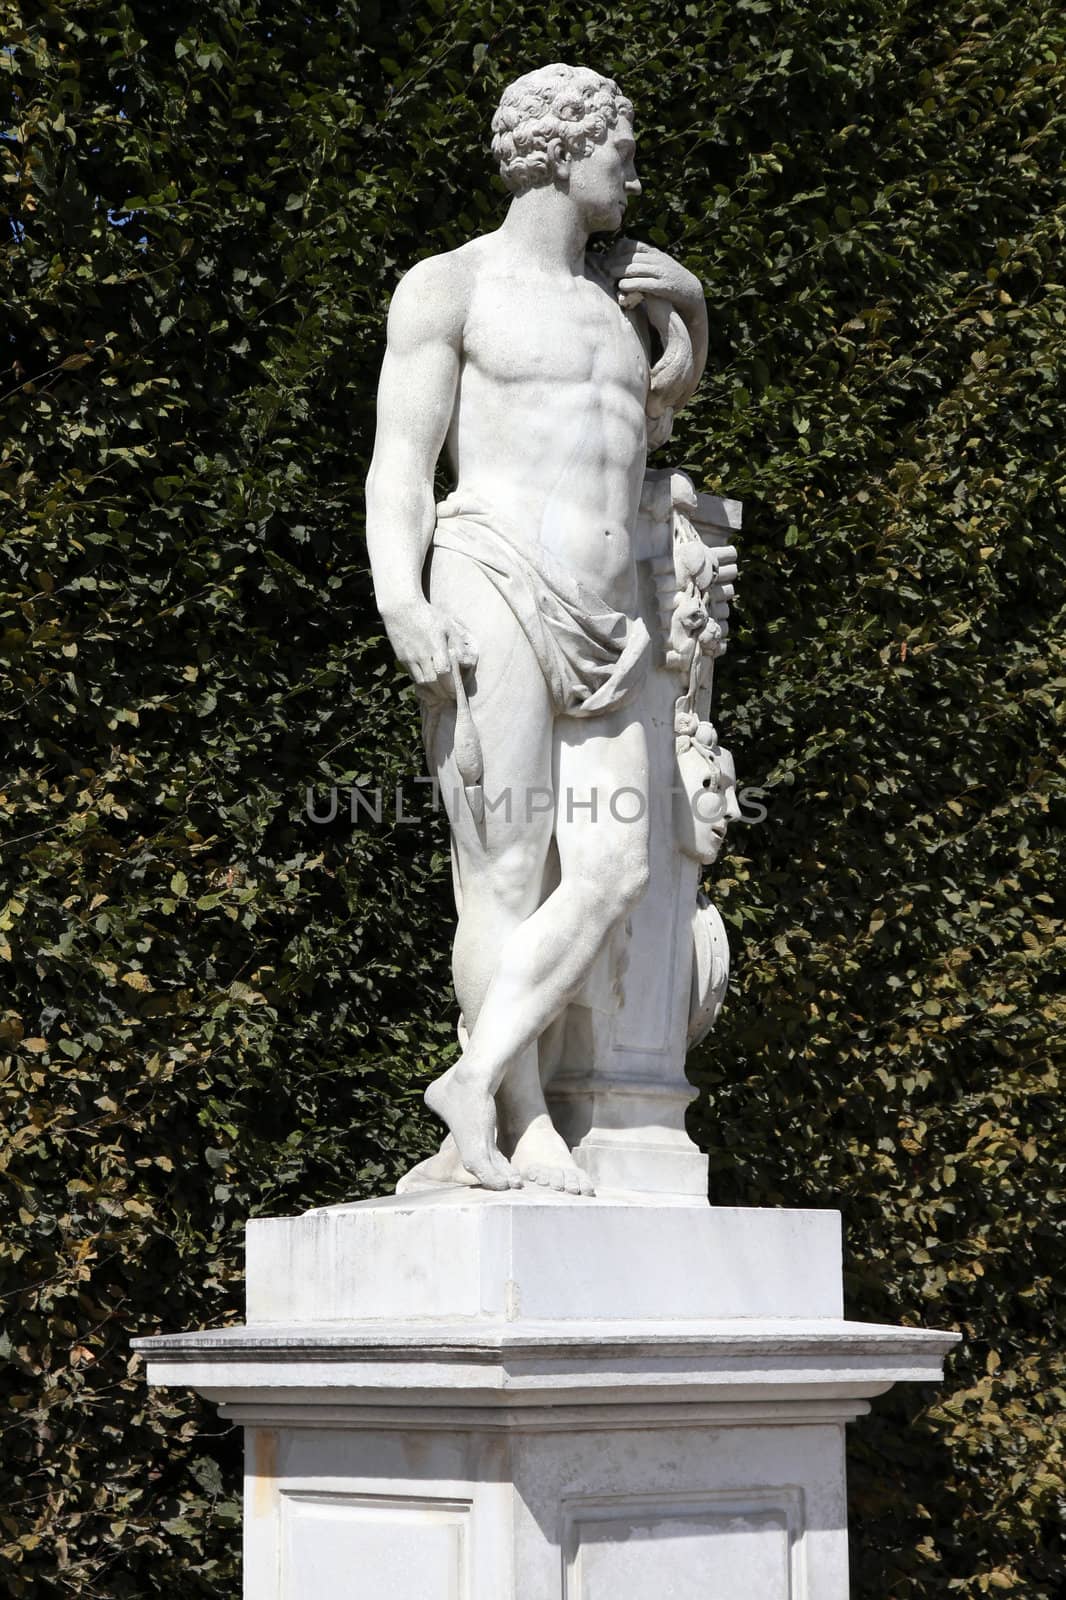 Vienna, Austria - statue of Hercules in Schoenbrunn Gardens, a UNESCO World Heritage Site.